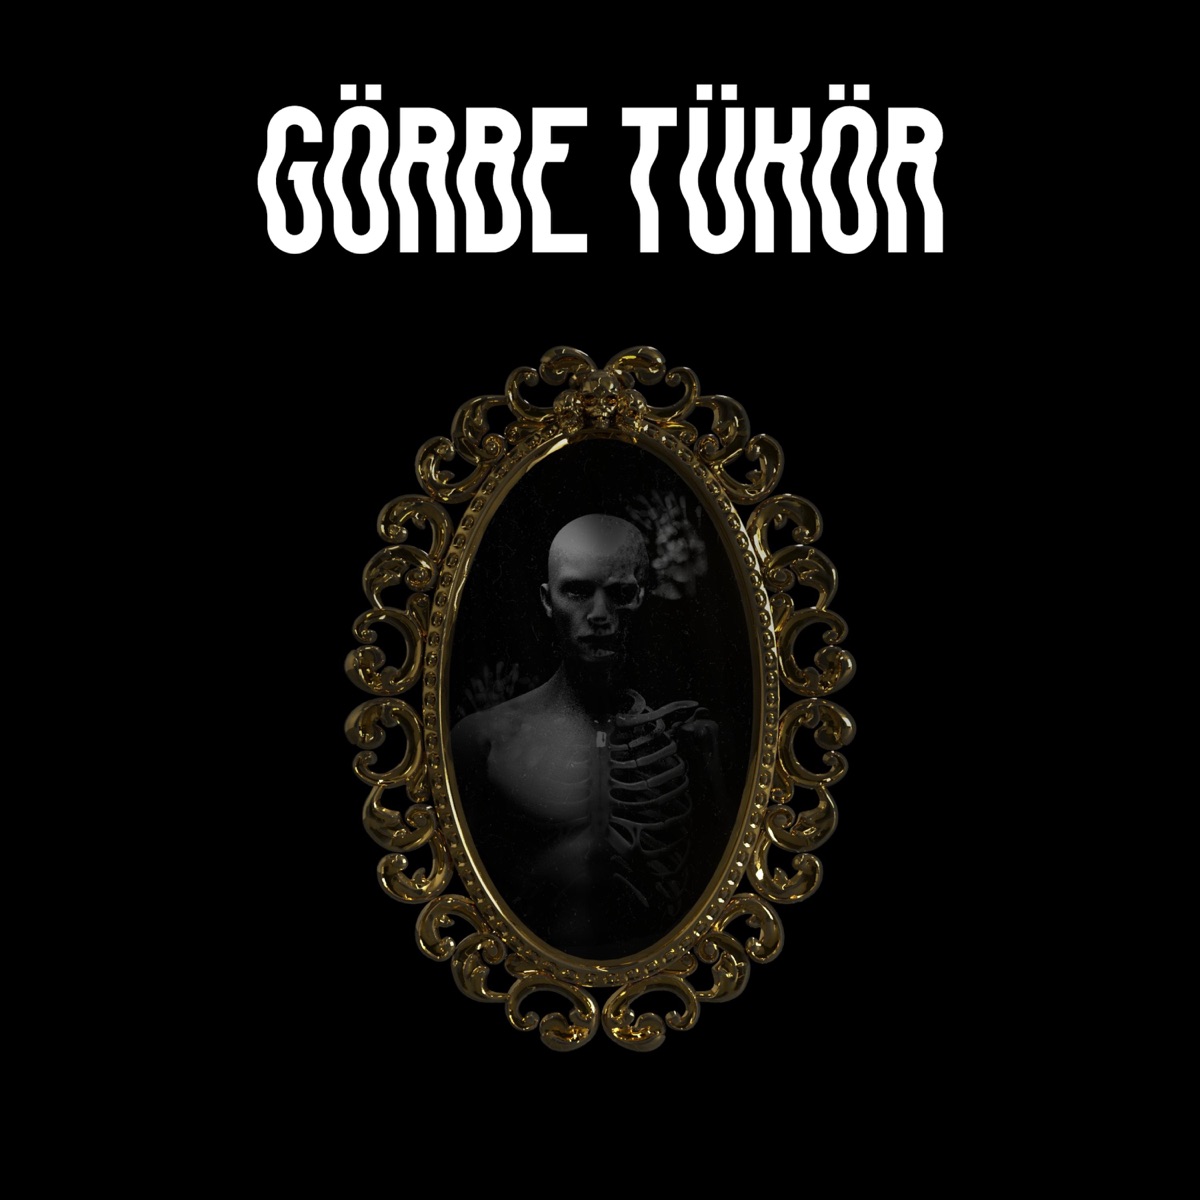 Görbe tükör - Single by SAFI on Apple Music